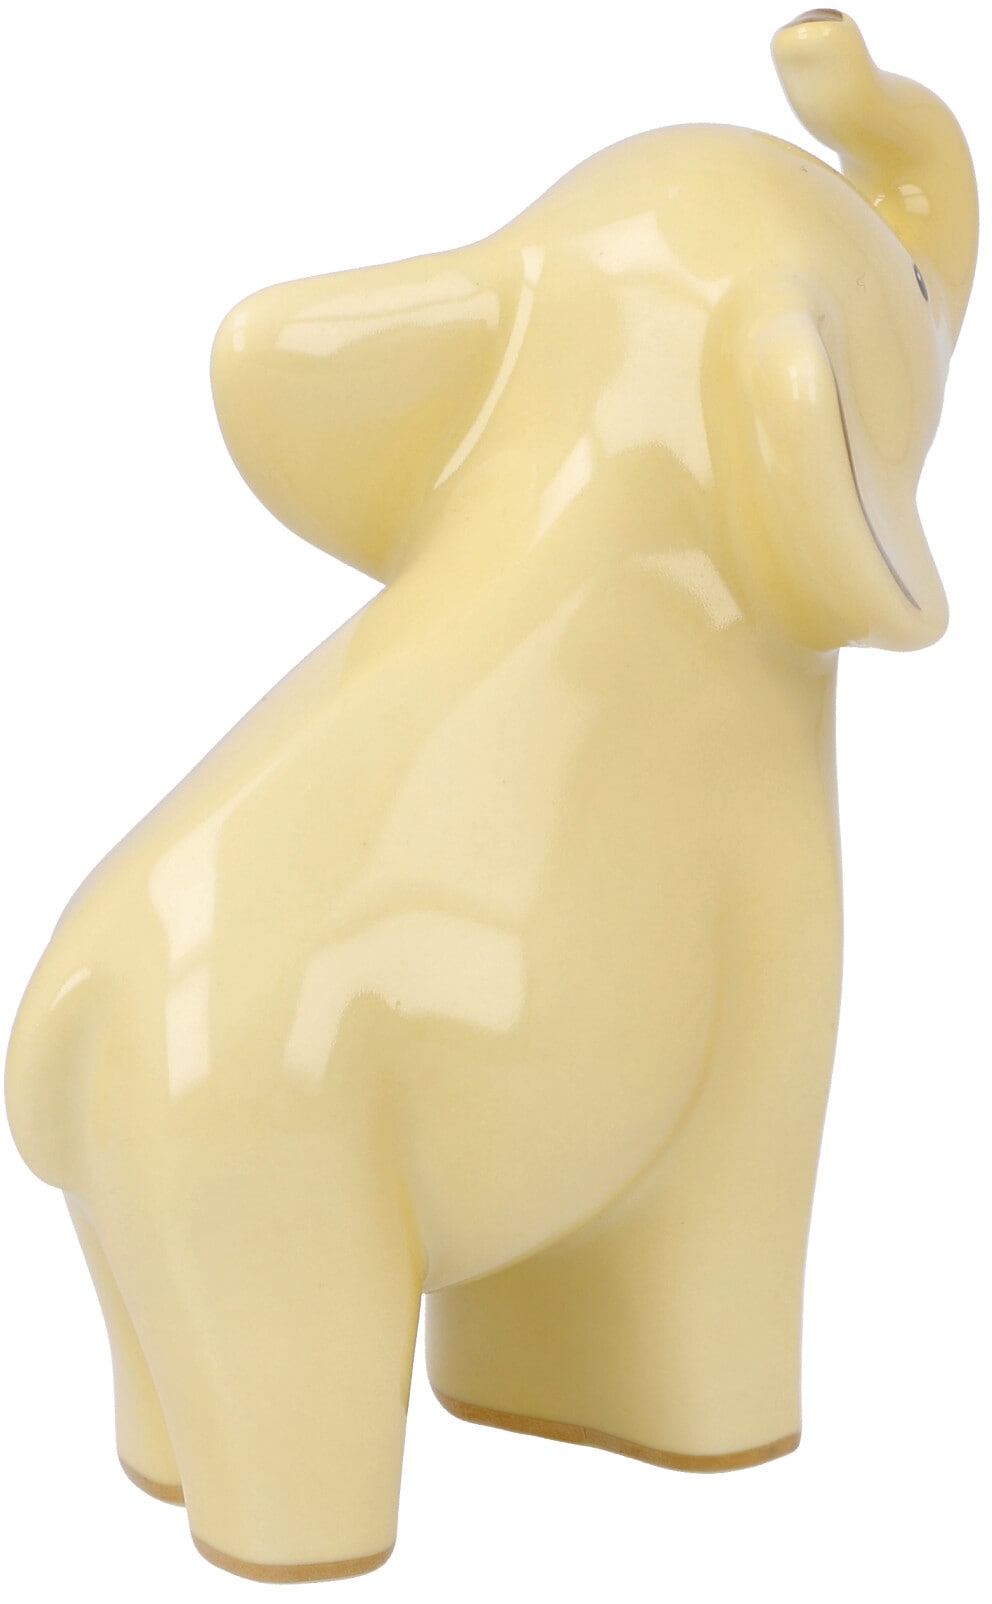 Sammelfigur kaufen Goebel Figur »Elephant«, Jotto - Porzellan, online